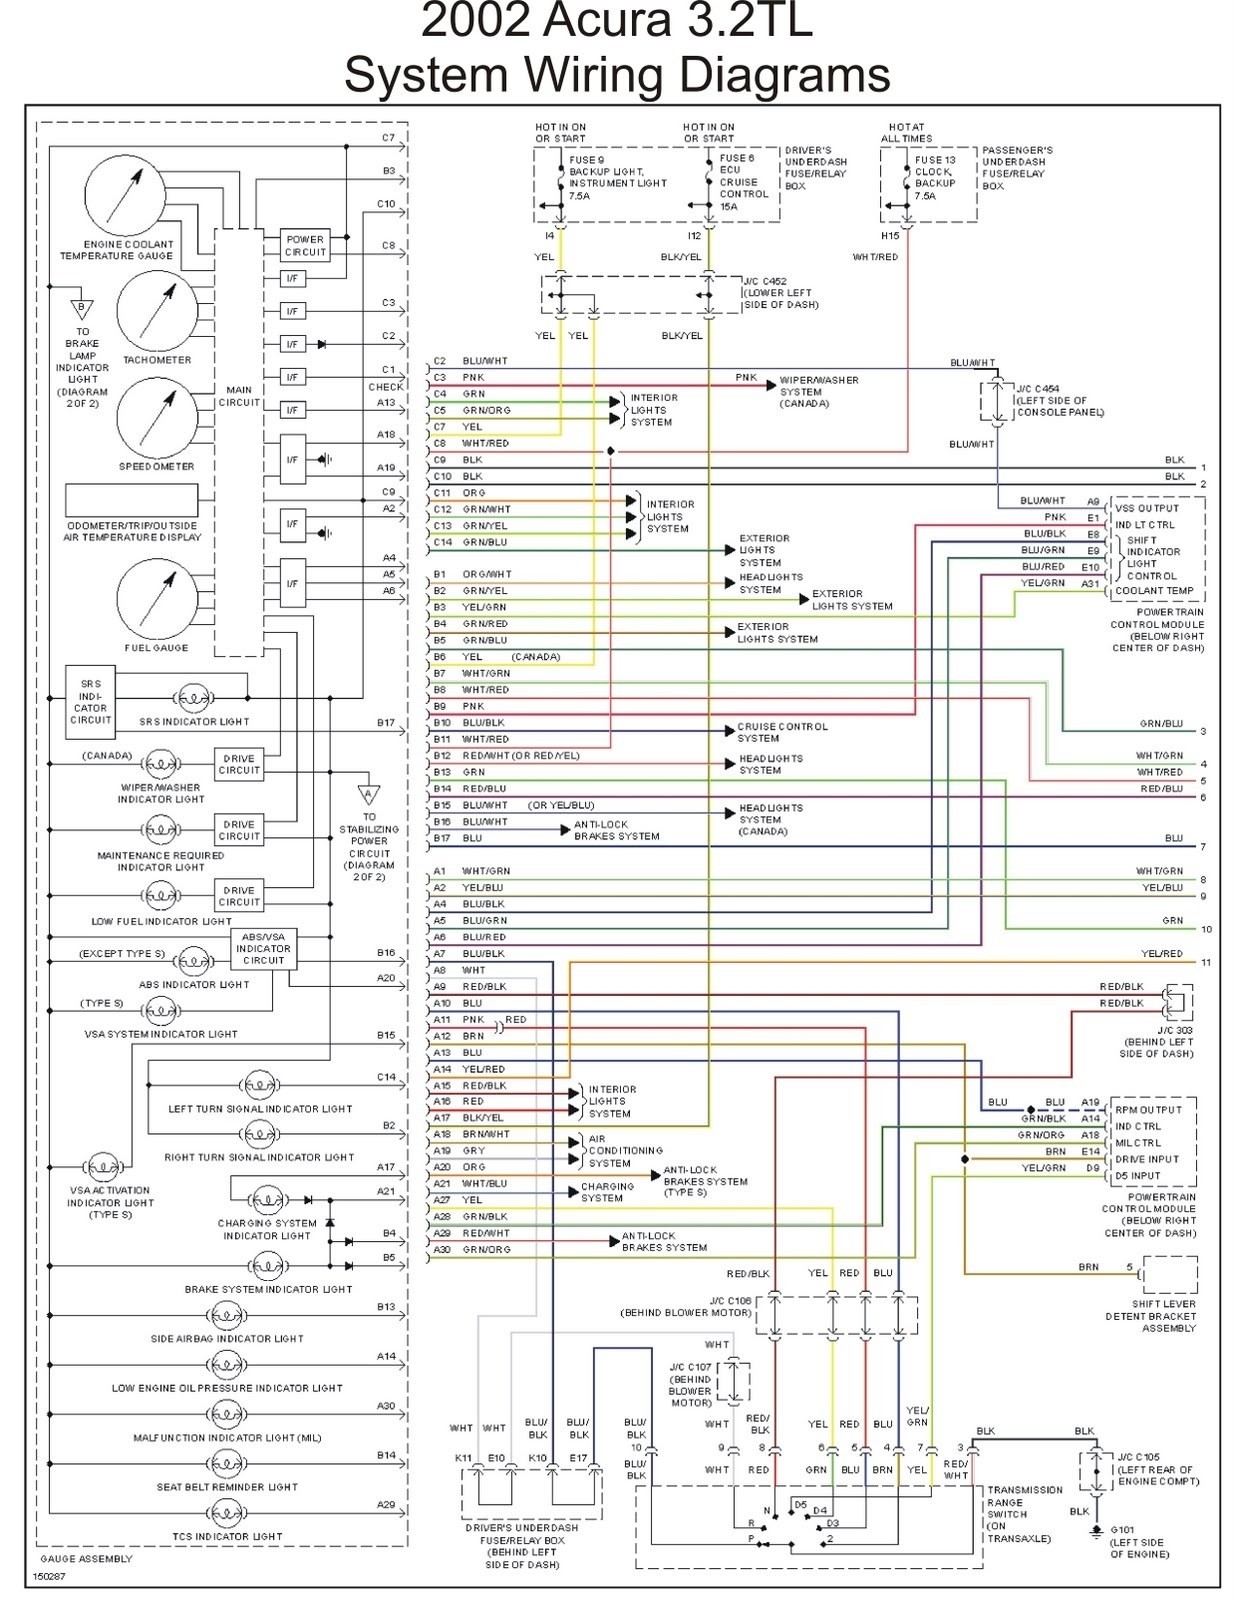 2000 Acura Tl Engine Diagram Fuse Box Acura Tl 2000 Wiring Diagram Inside Of 2000 Acura Tl Engine Diagram